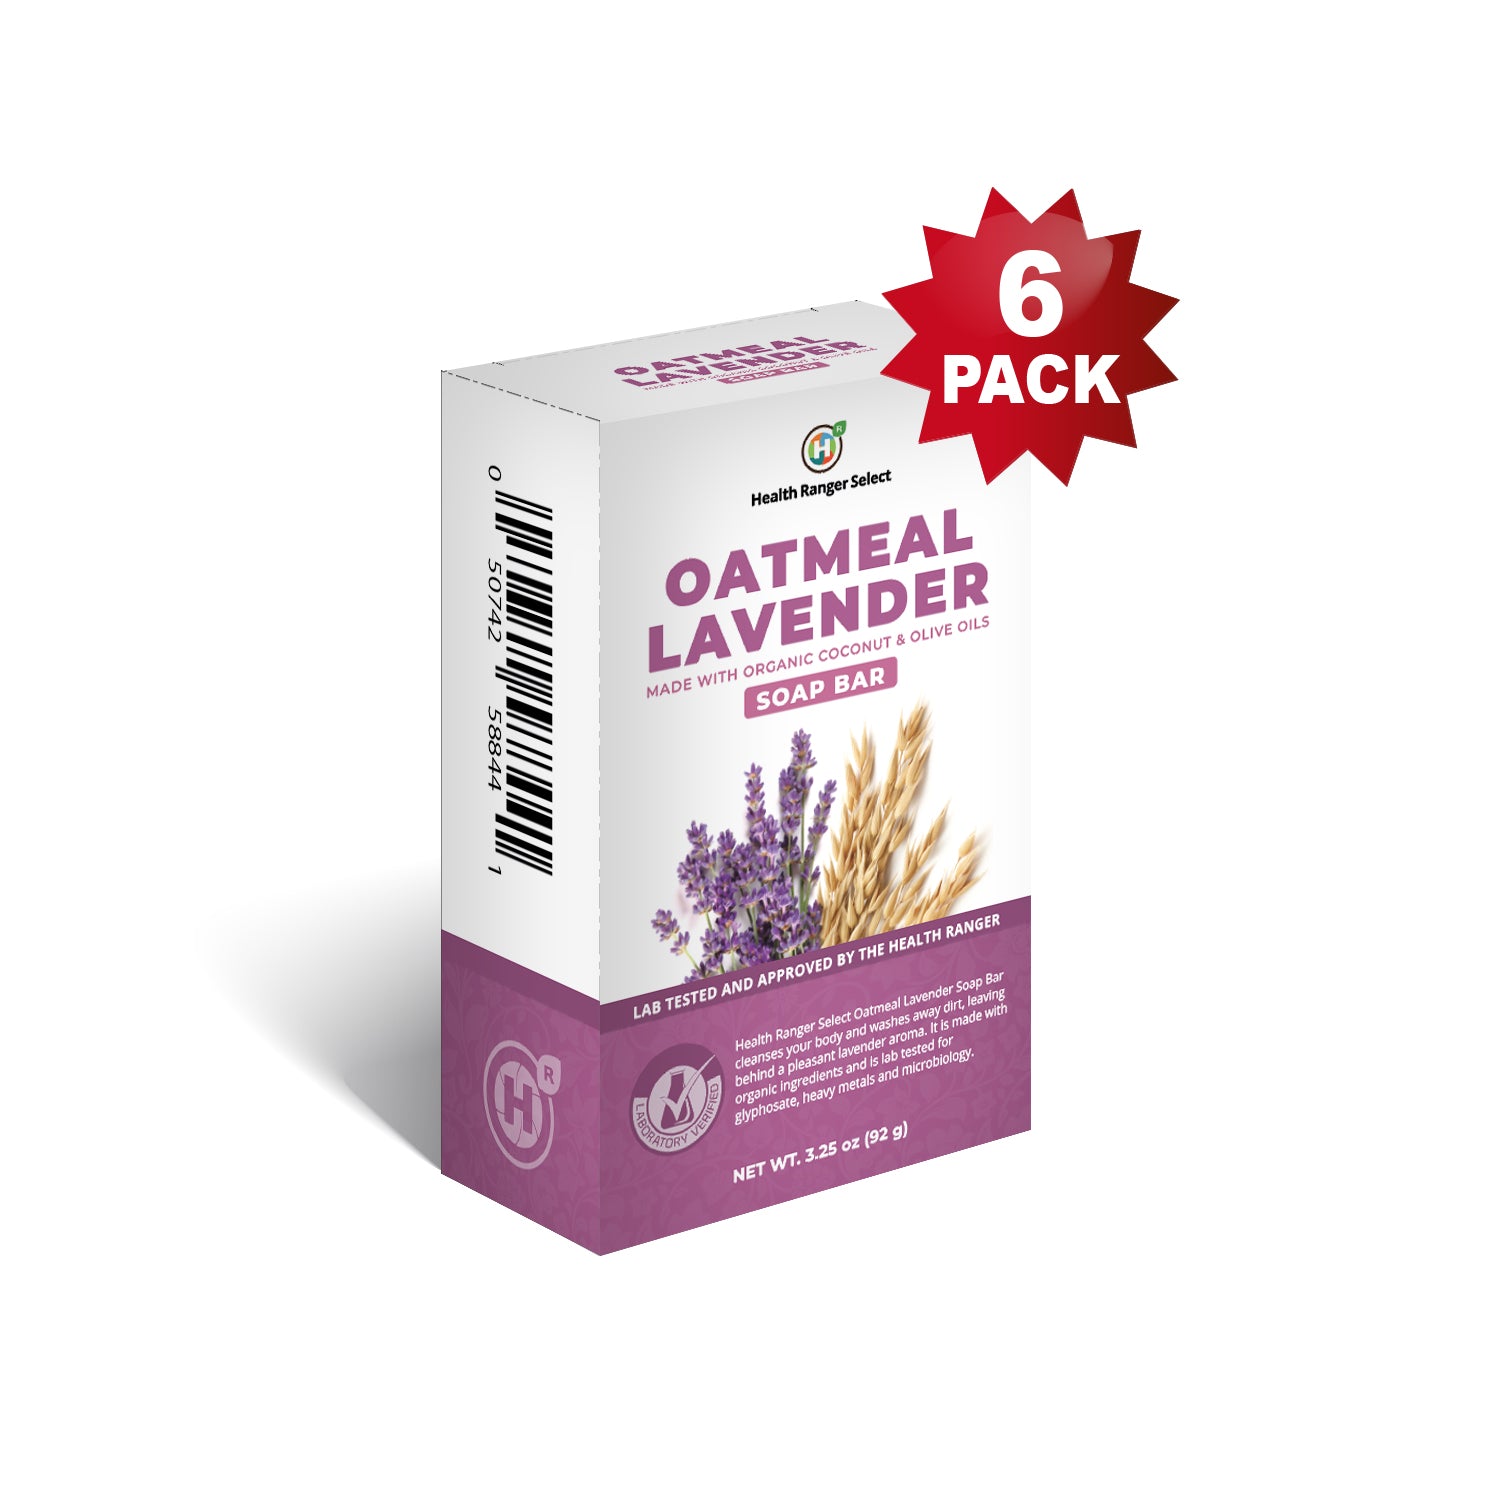 Oatmeal Lavender Soap Bar 3.25 oz (92g) (6-Pack)